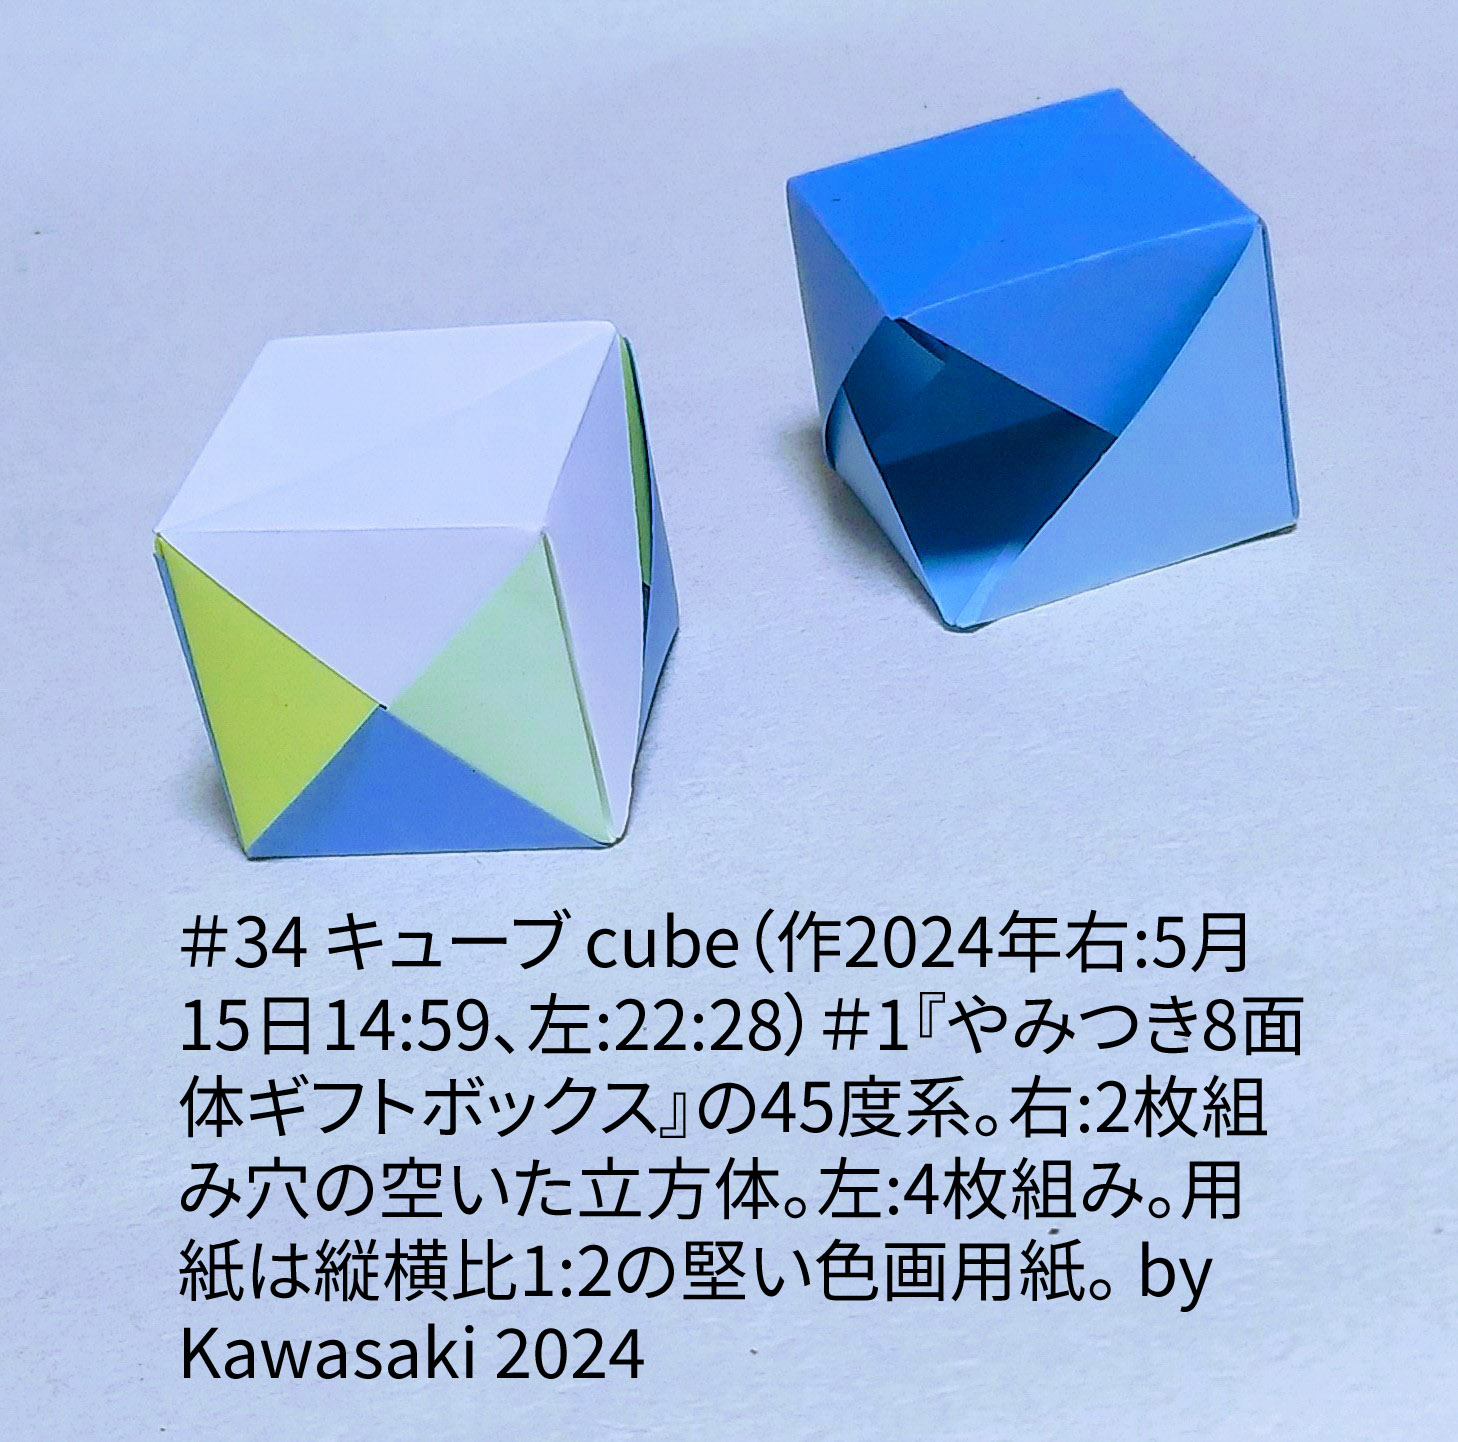 2024/05/16(Thu) 11:08「＃34 キューブ cube （作2023年右:5月15日14:59、左:22:28)」川崎敏和 T.Kawasaki
（創作者 Author：川崎敏和 T.Kawasaki,　製作者 Folder：川崎敏和 T.Kawasaki ,　出典 Source：2024年川崎敏和折り紙キット＃33）
 ＃1『やみつき8面体ギフトボックス』の45度系。右:2枚組み穴の空いた立方体。左:4枚組み。用紙は縦横比1:2の堅い色画用紙。 by Kawasaki 2024